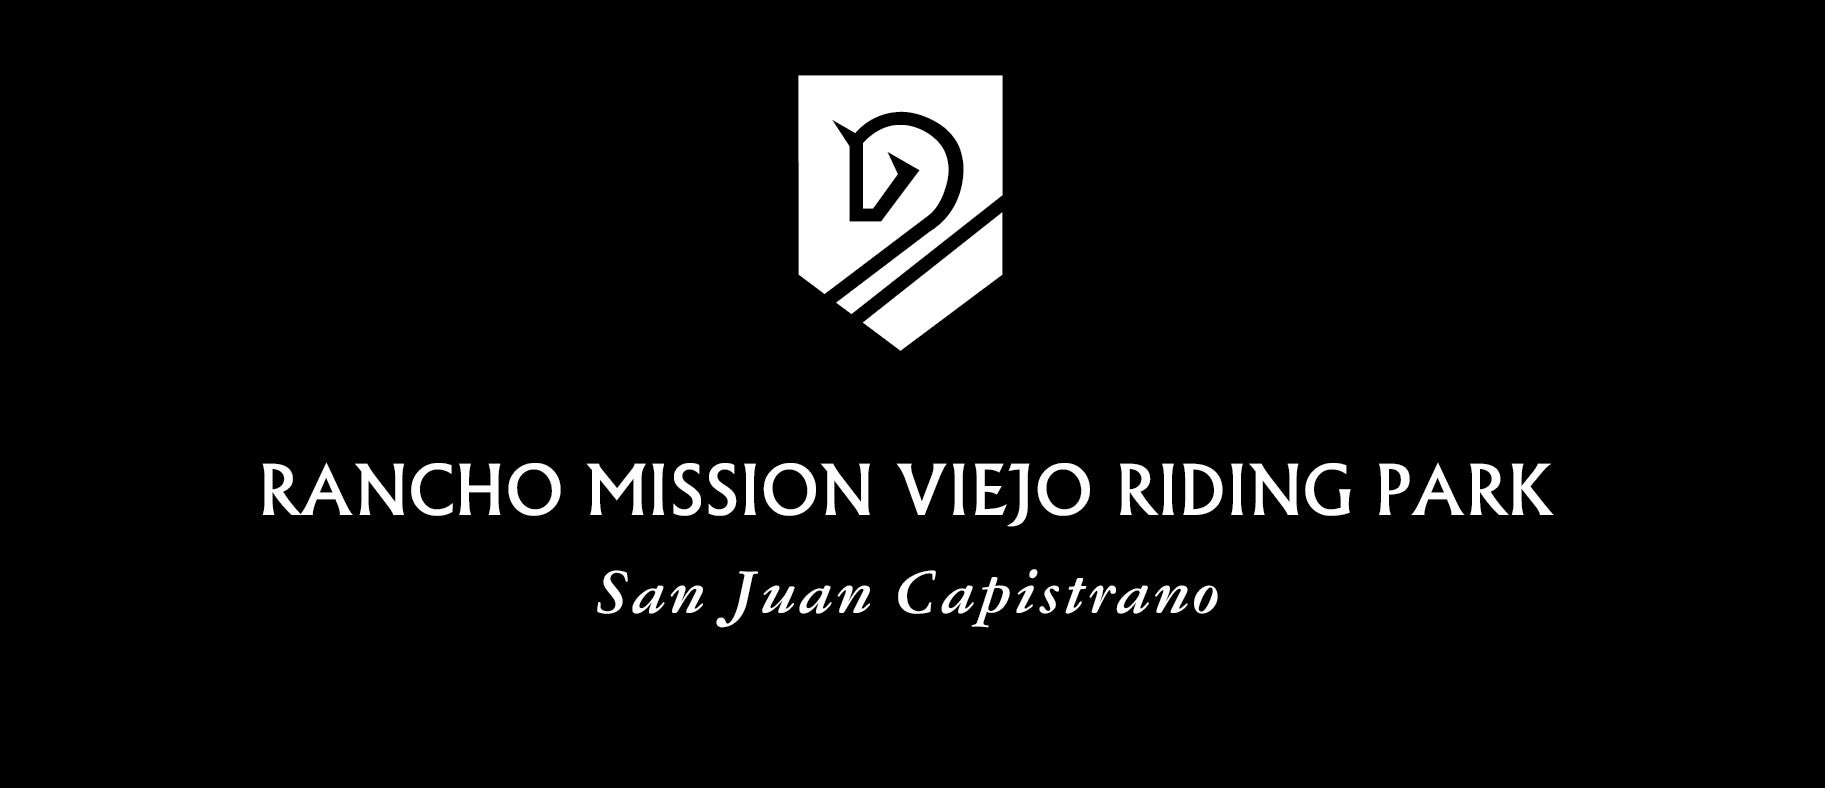 RMV_RidingParkBrand logo horizontal.jpg